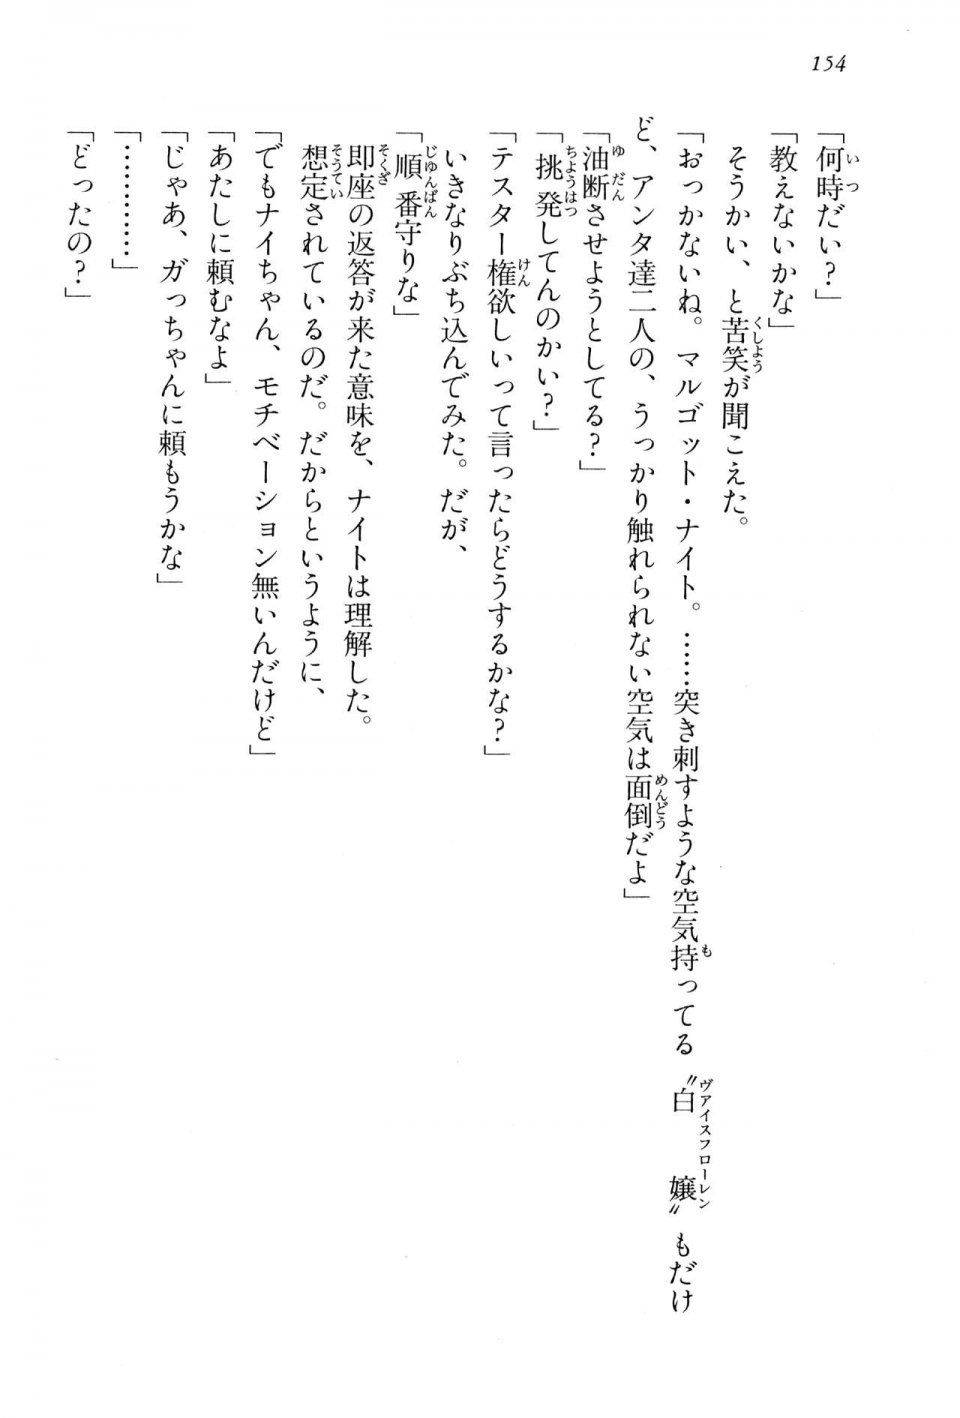 Kyoukai Senjou no Horizon BD Special Mininovel Vol 2(1B) - Photo #158